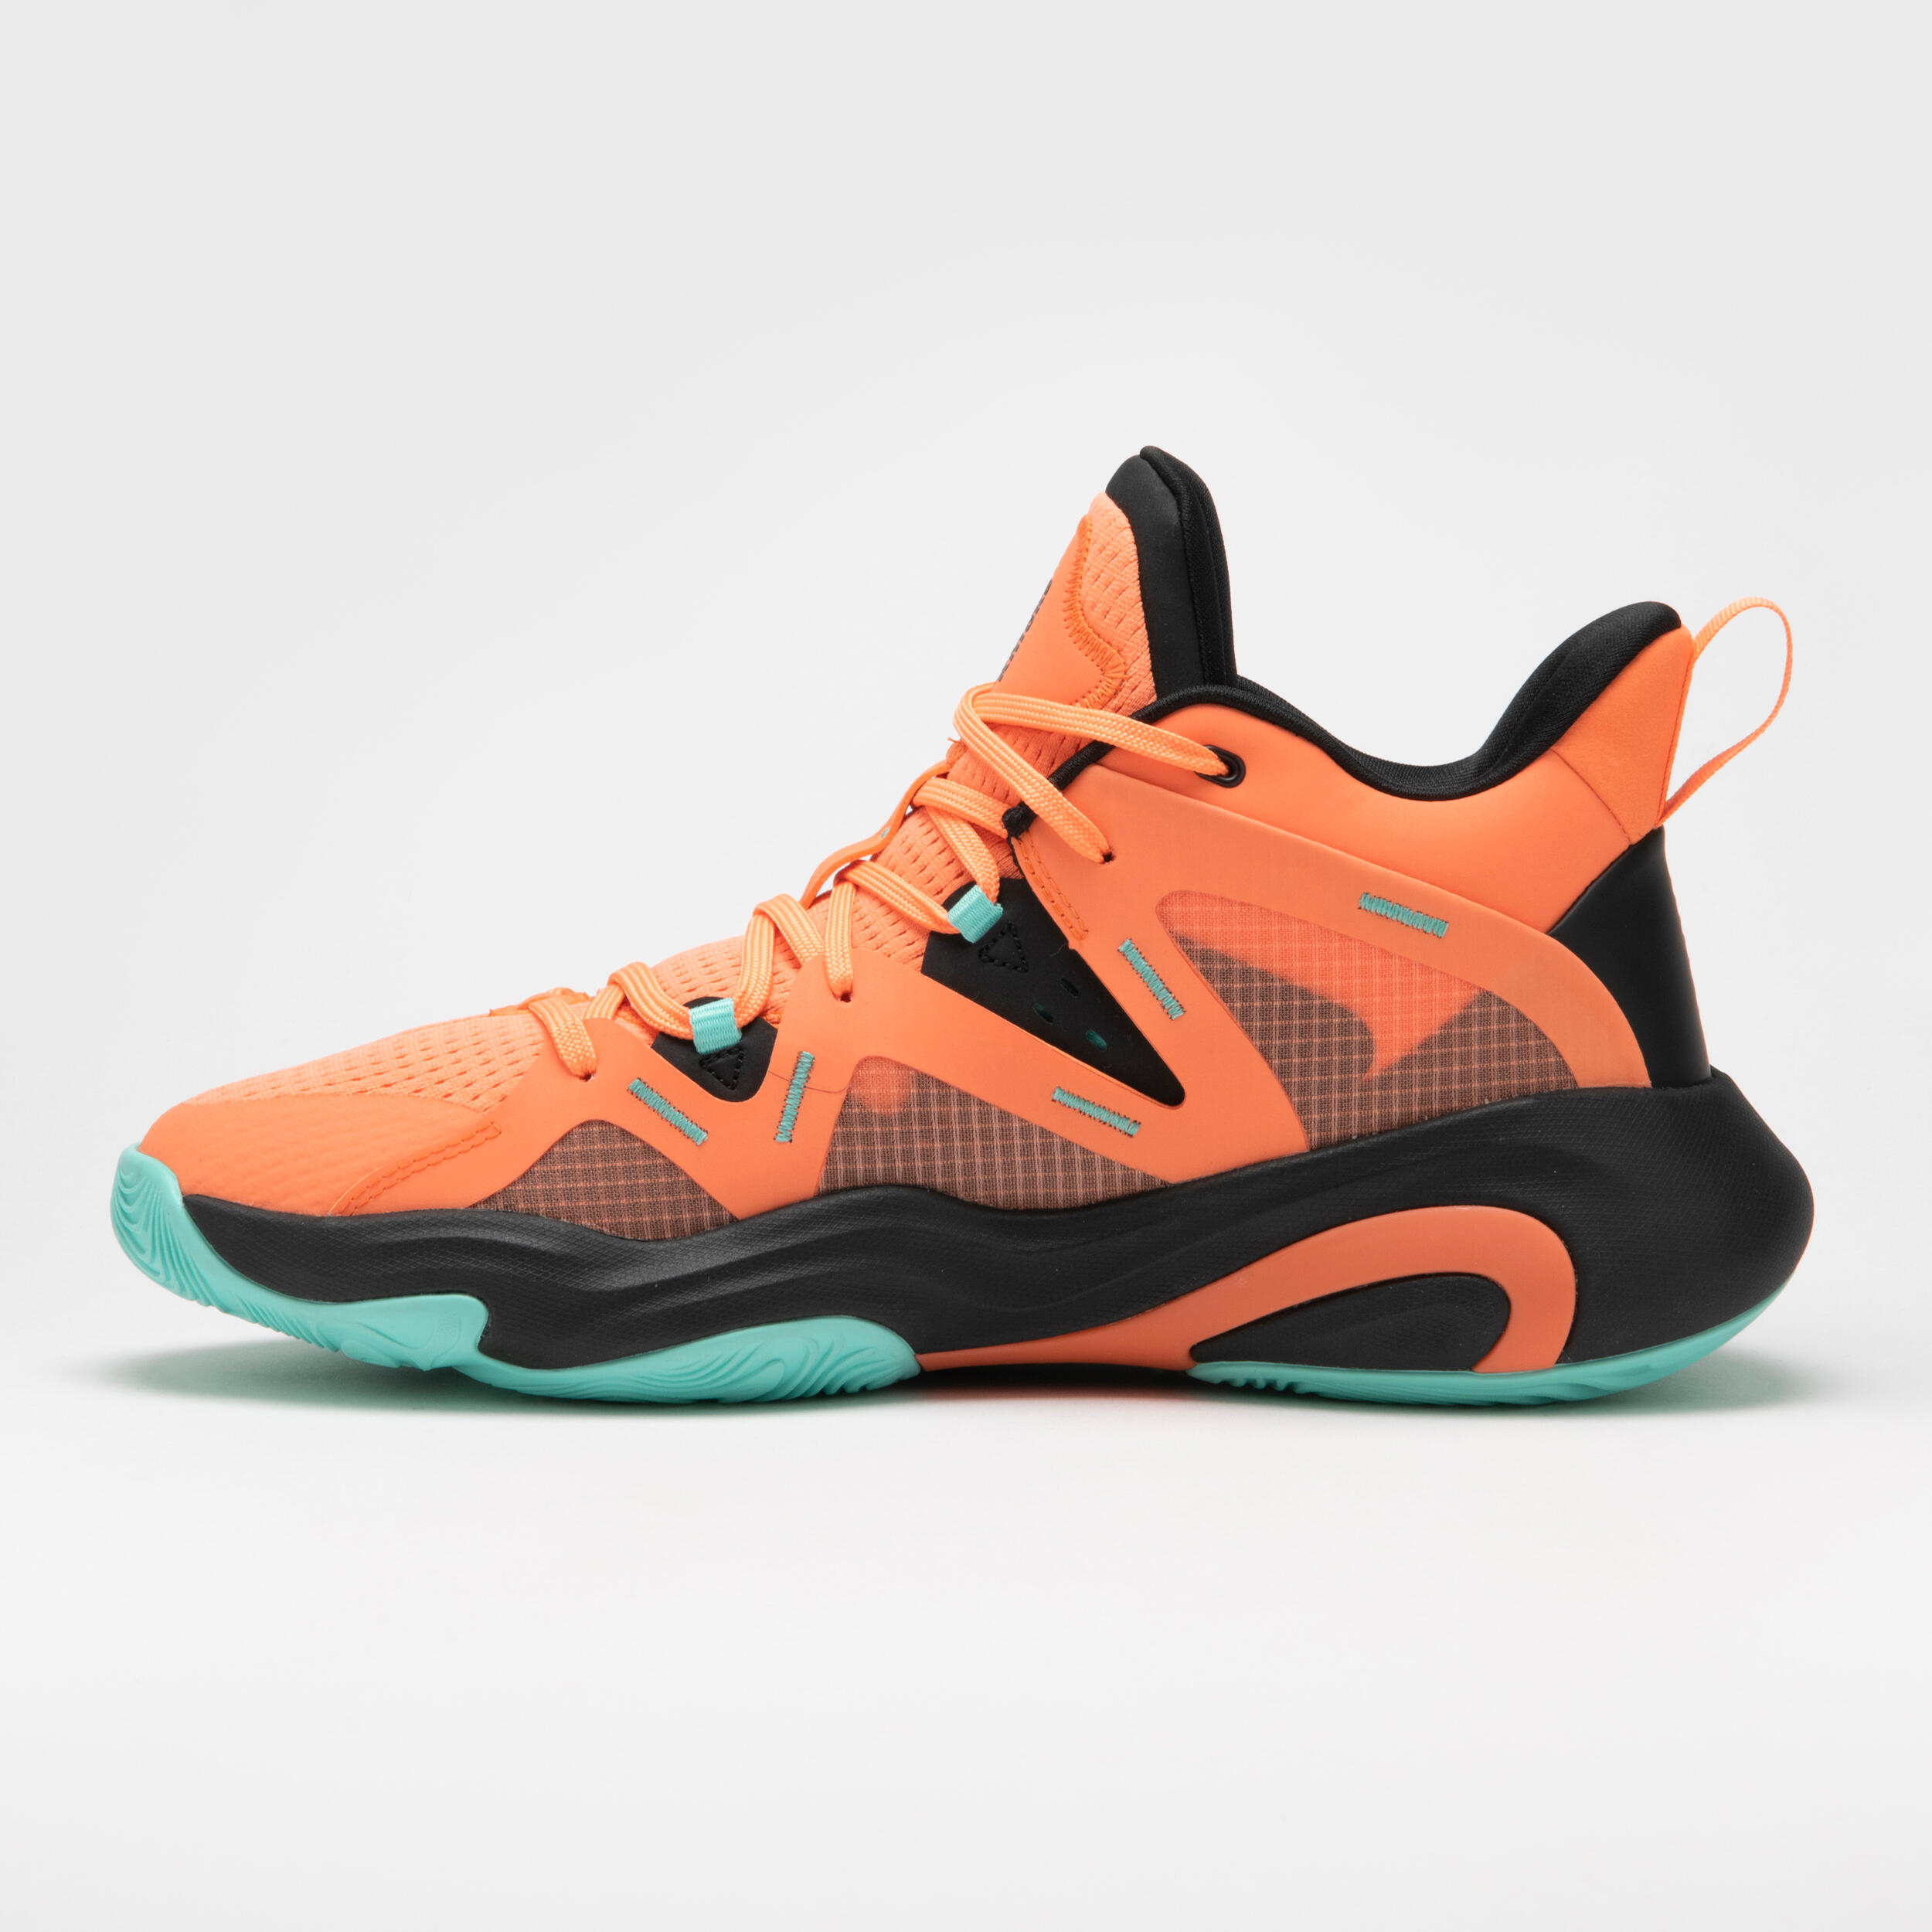 Men's/Women's Basketball Shoes 900 NBA MID-3 - New York Knicks/Orange 2/11